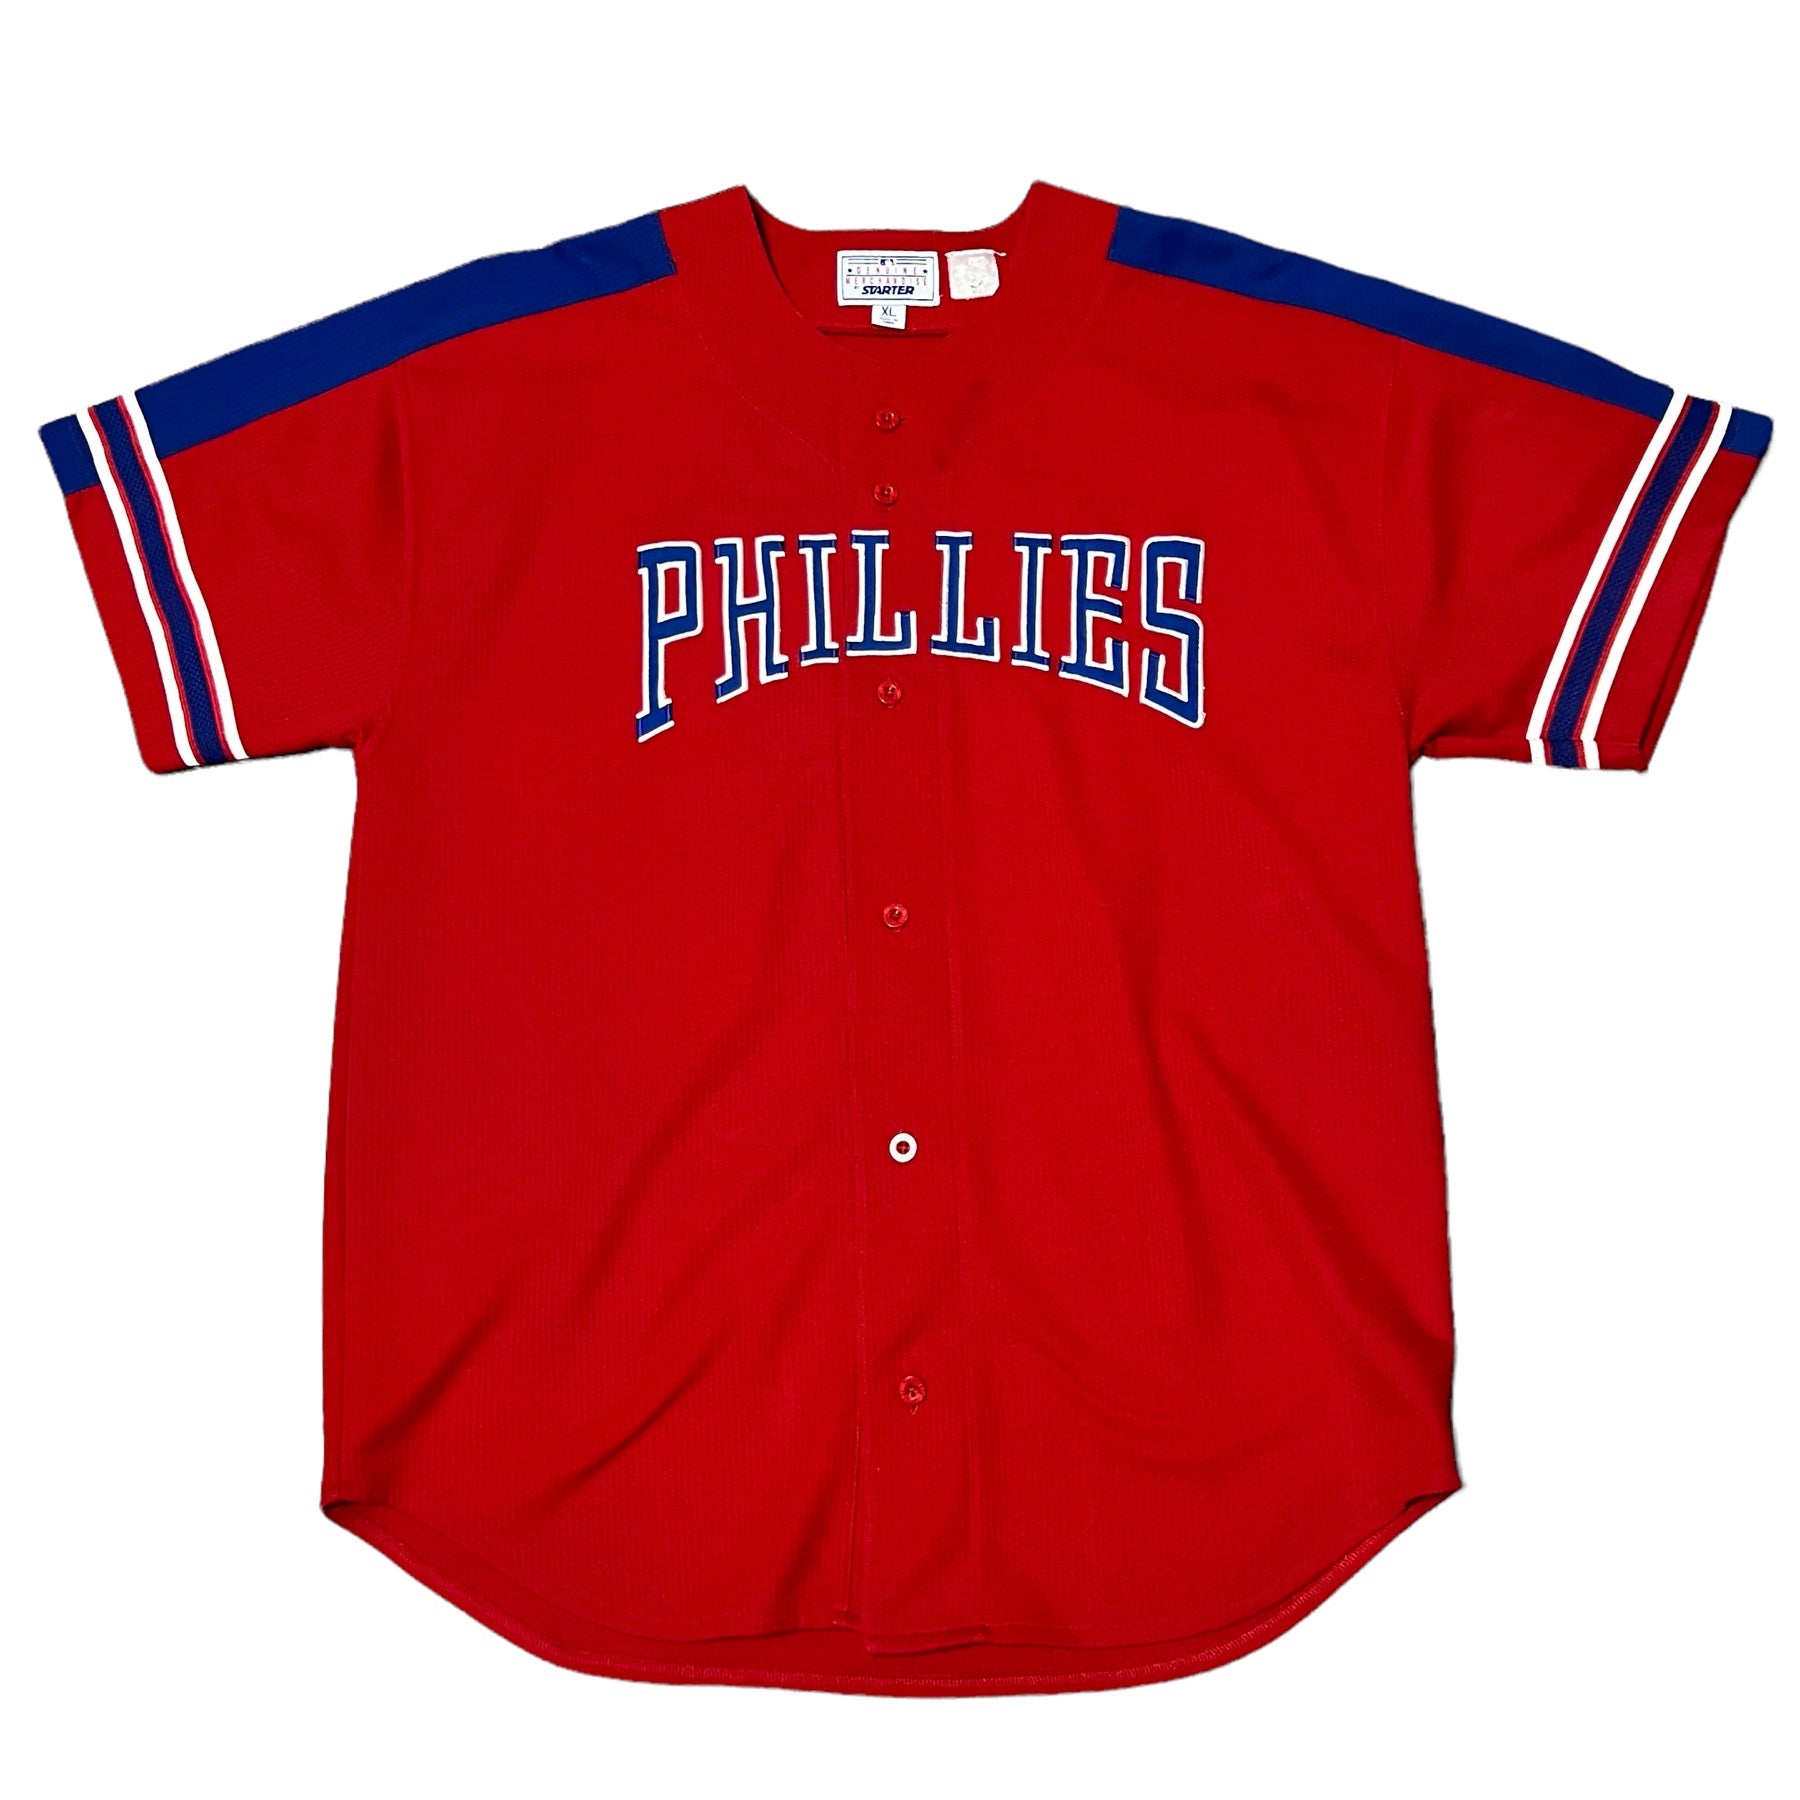 phillies batting jersey